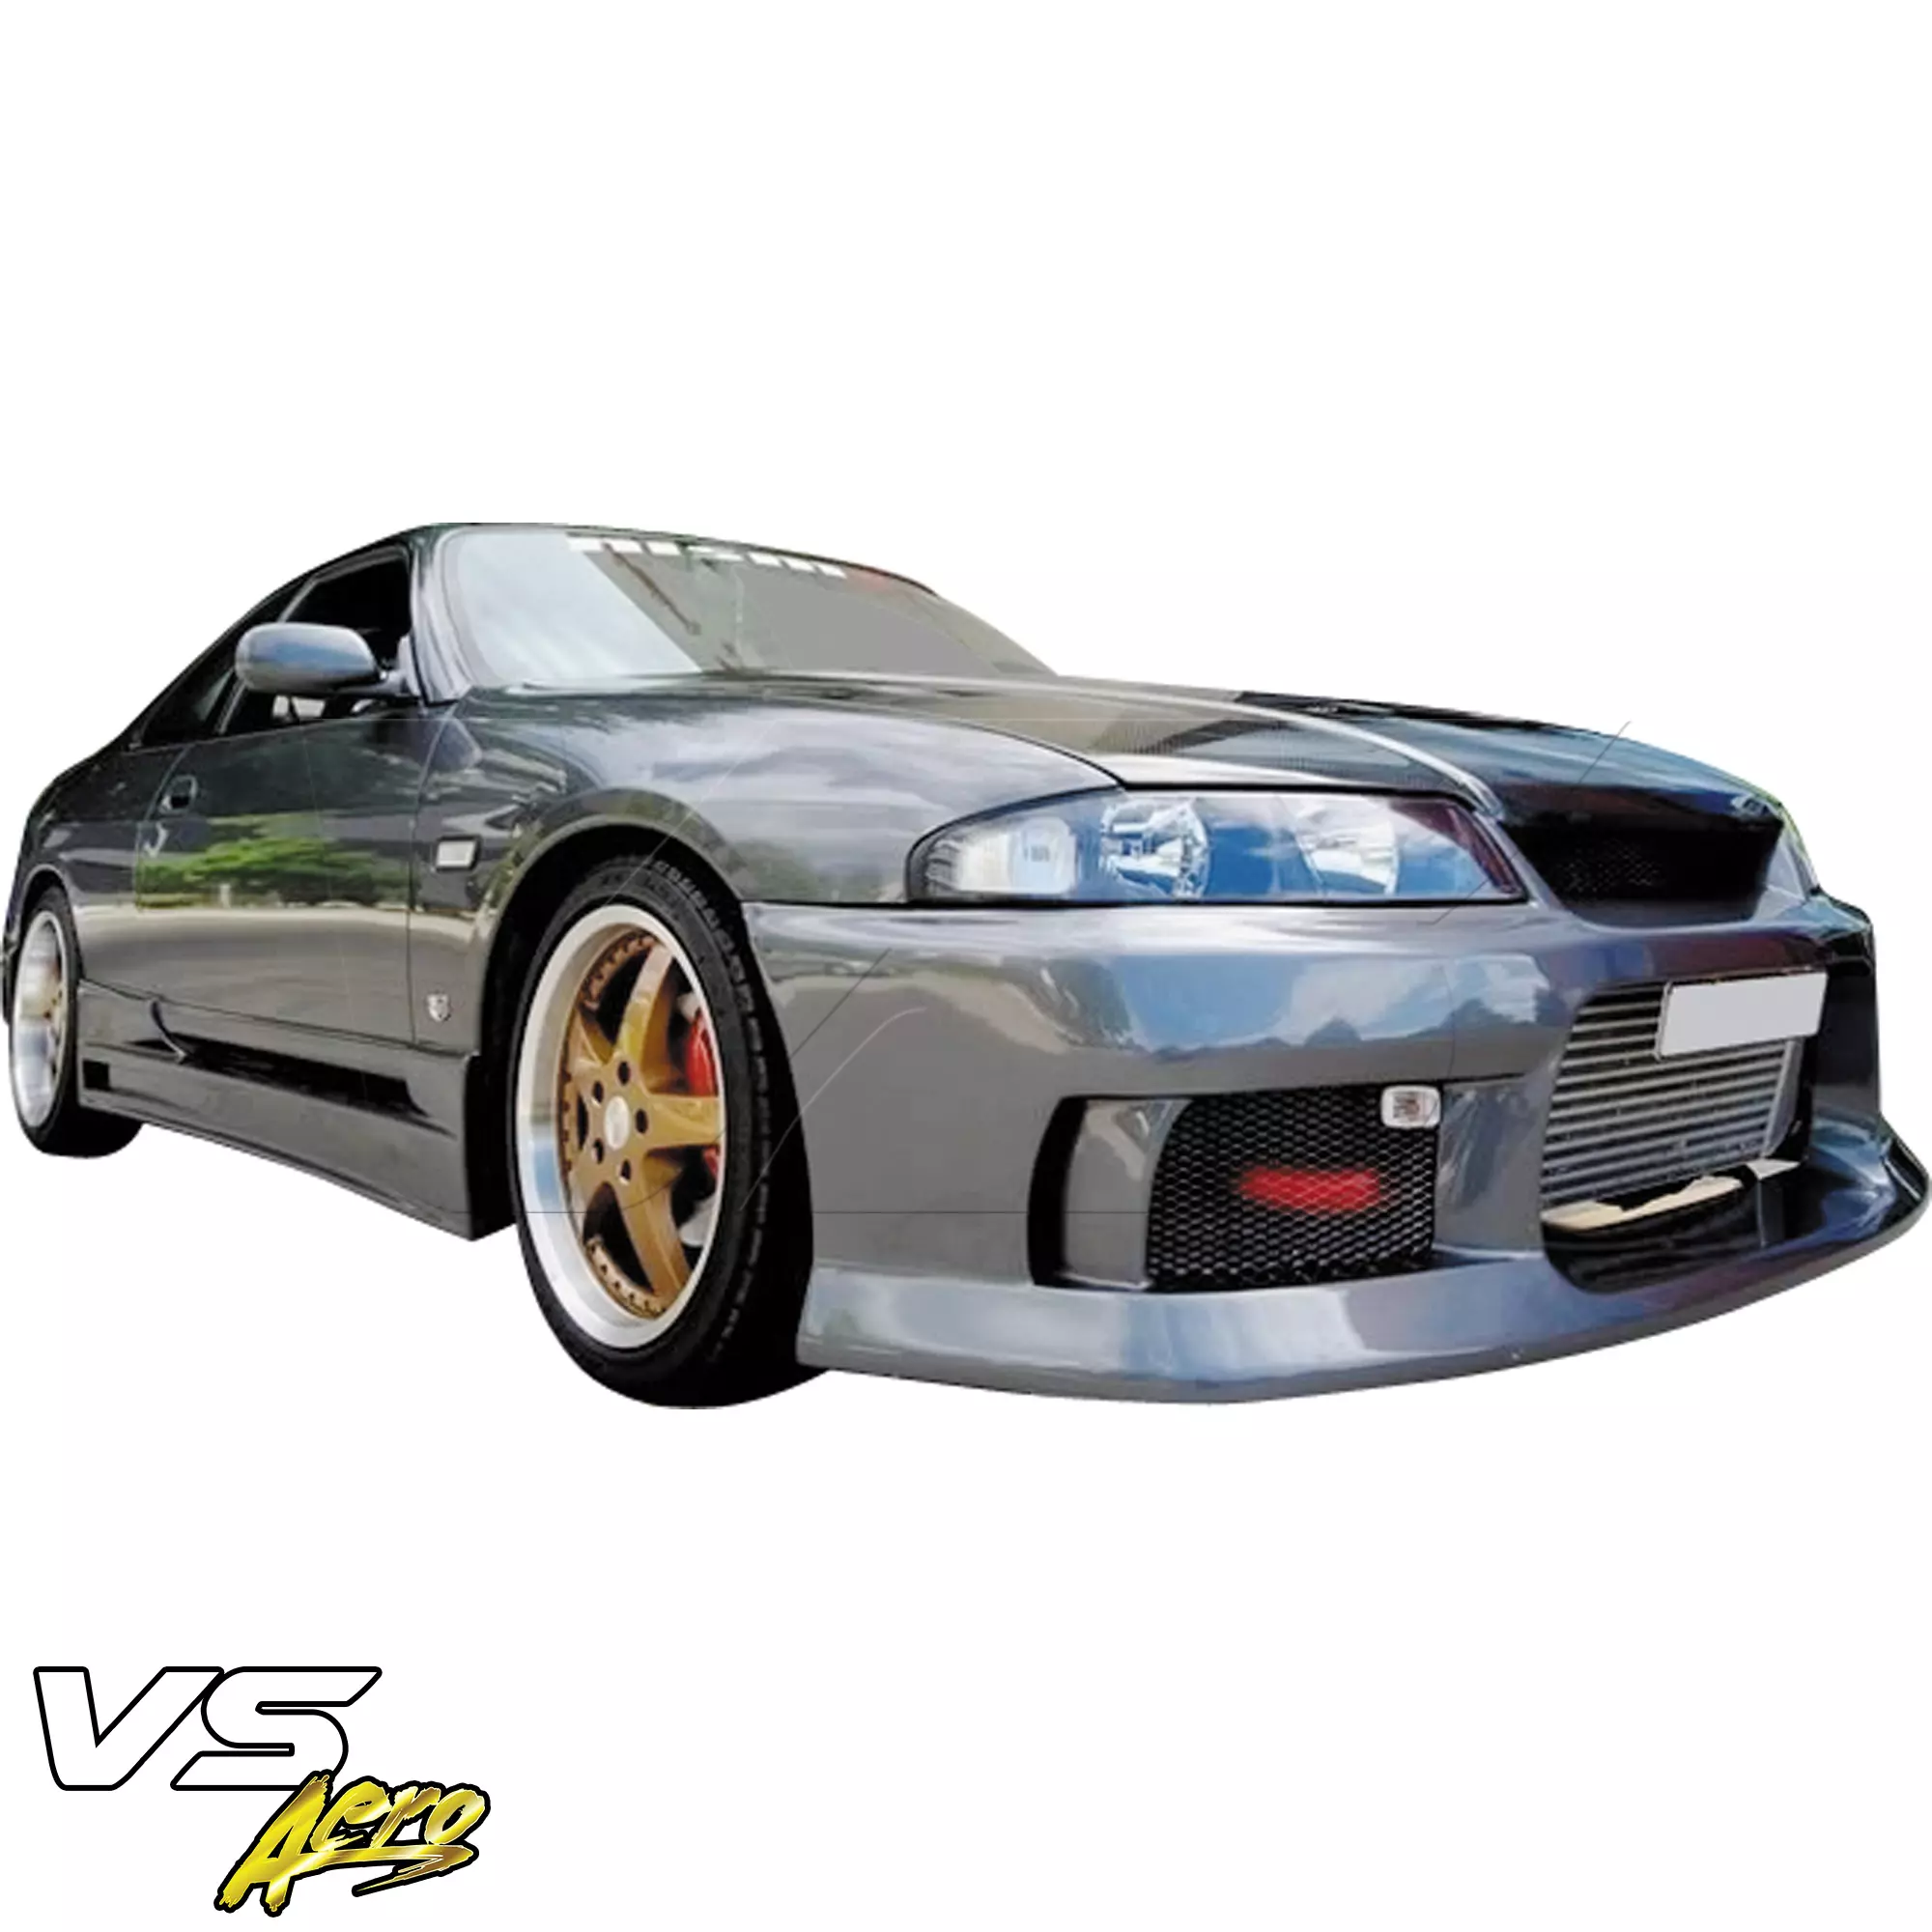 VSaero FRP MSPO v2 Body Kit 4pc > Nissan Skyline R33 GTS 1995-1998 > 2dr Coupe - Image 10